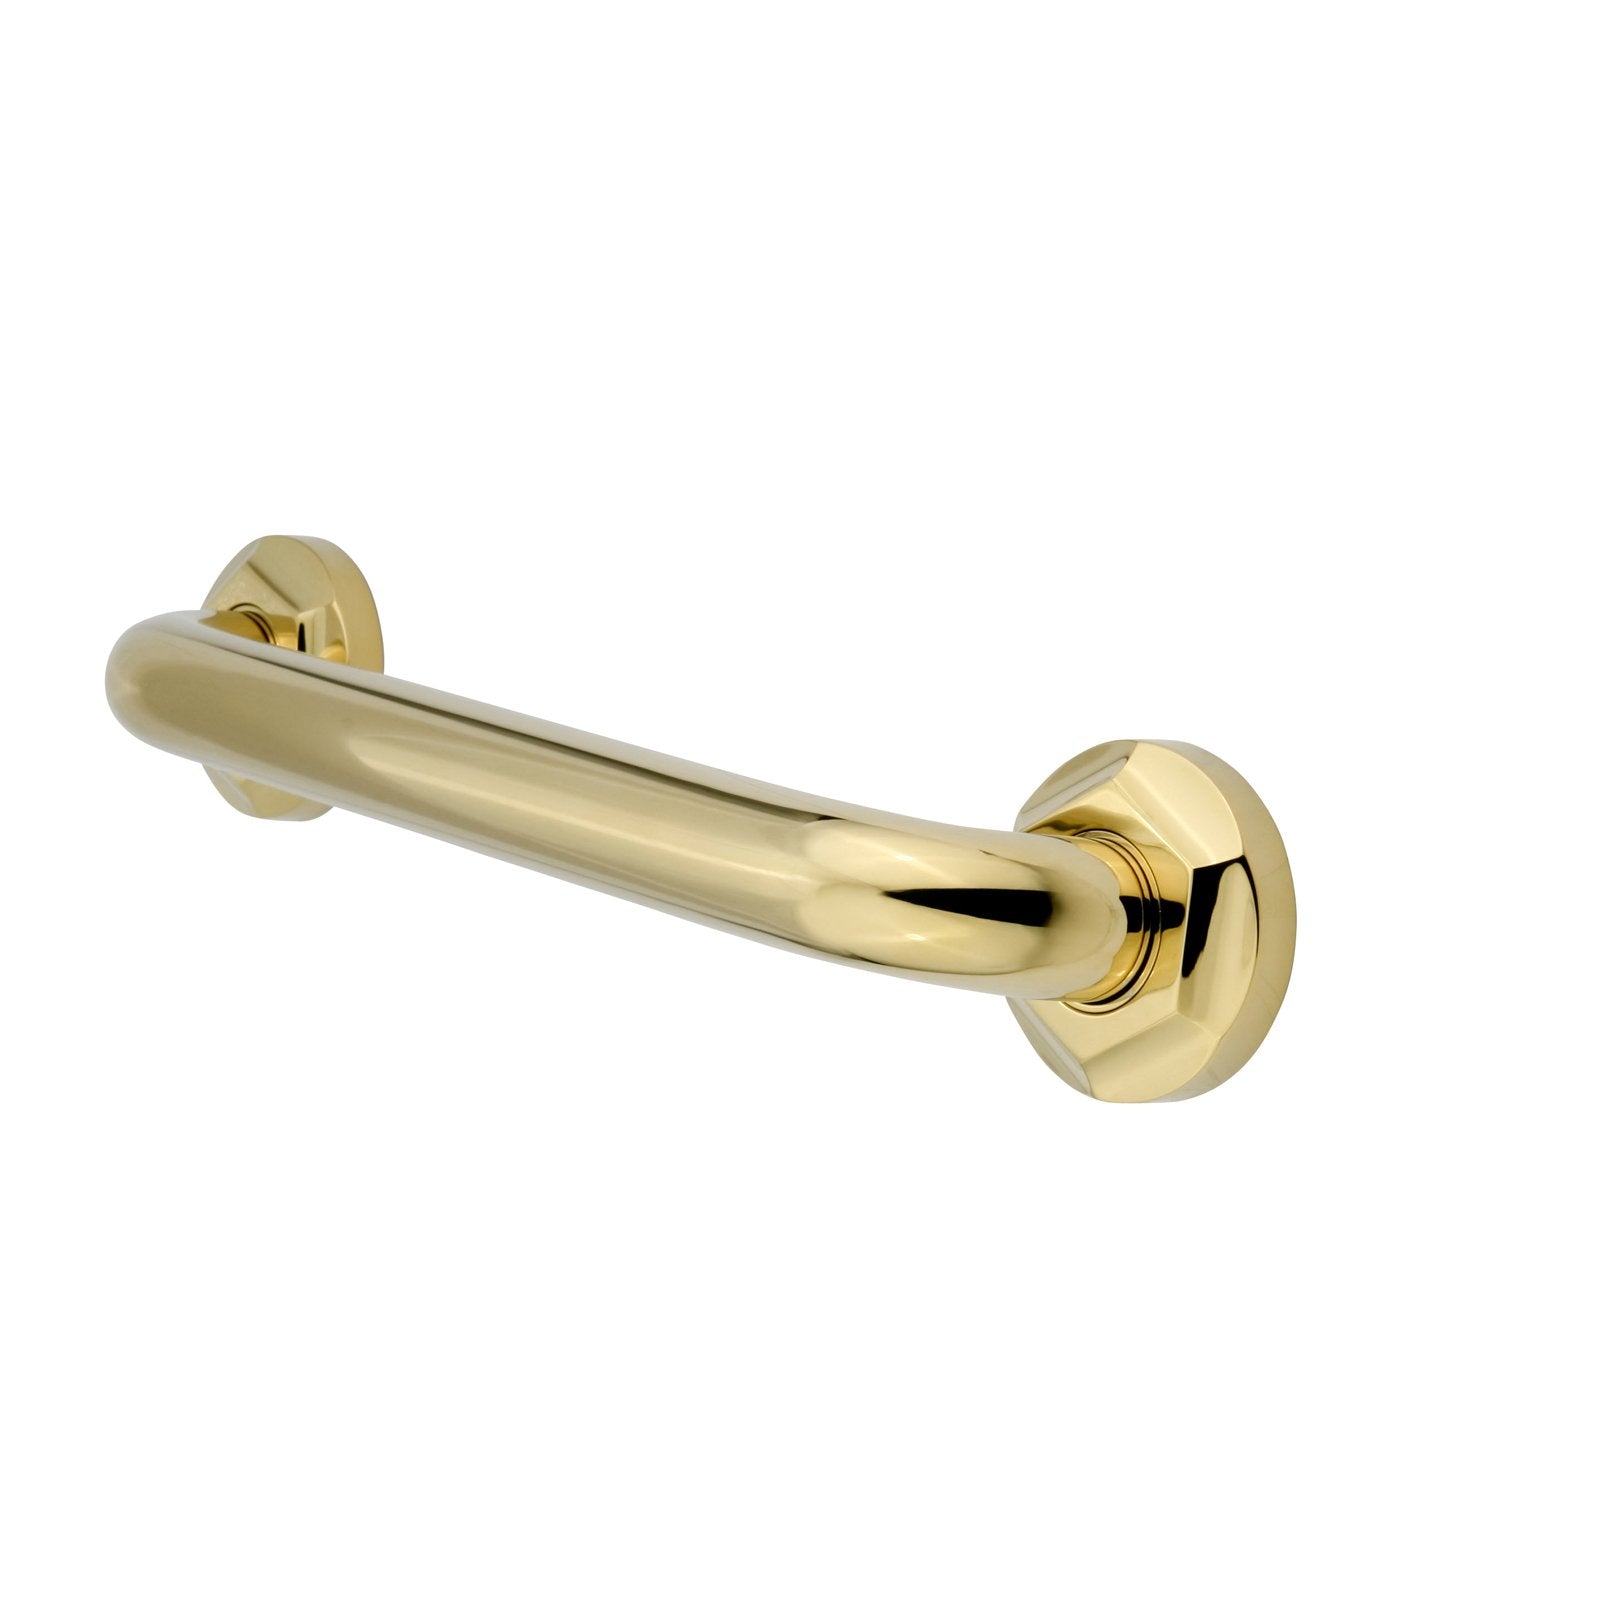 Kingston Brass Metropolitan Decorative Grab Bar-Bathroom Accessories-Free Shipping-Directsinks.